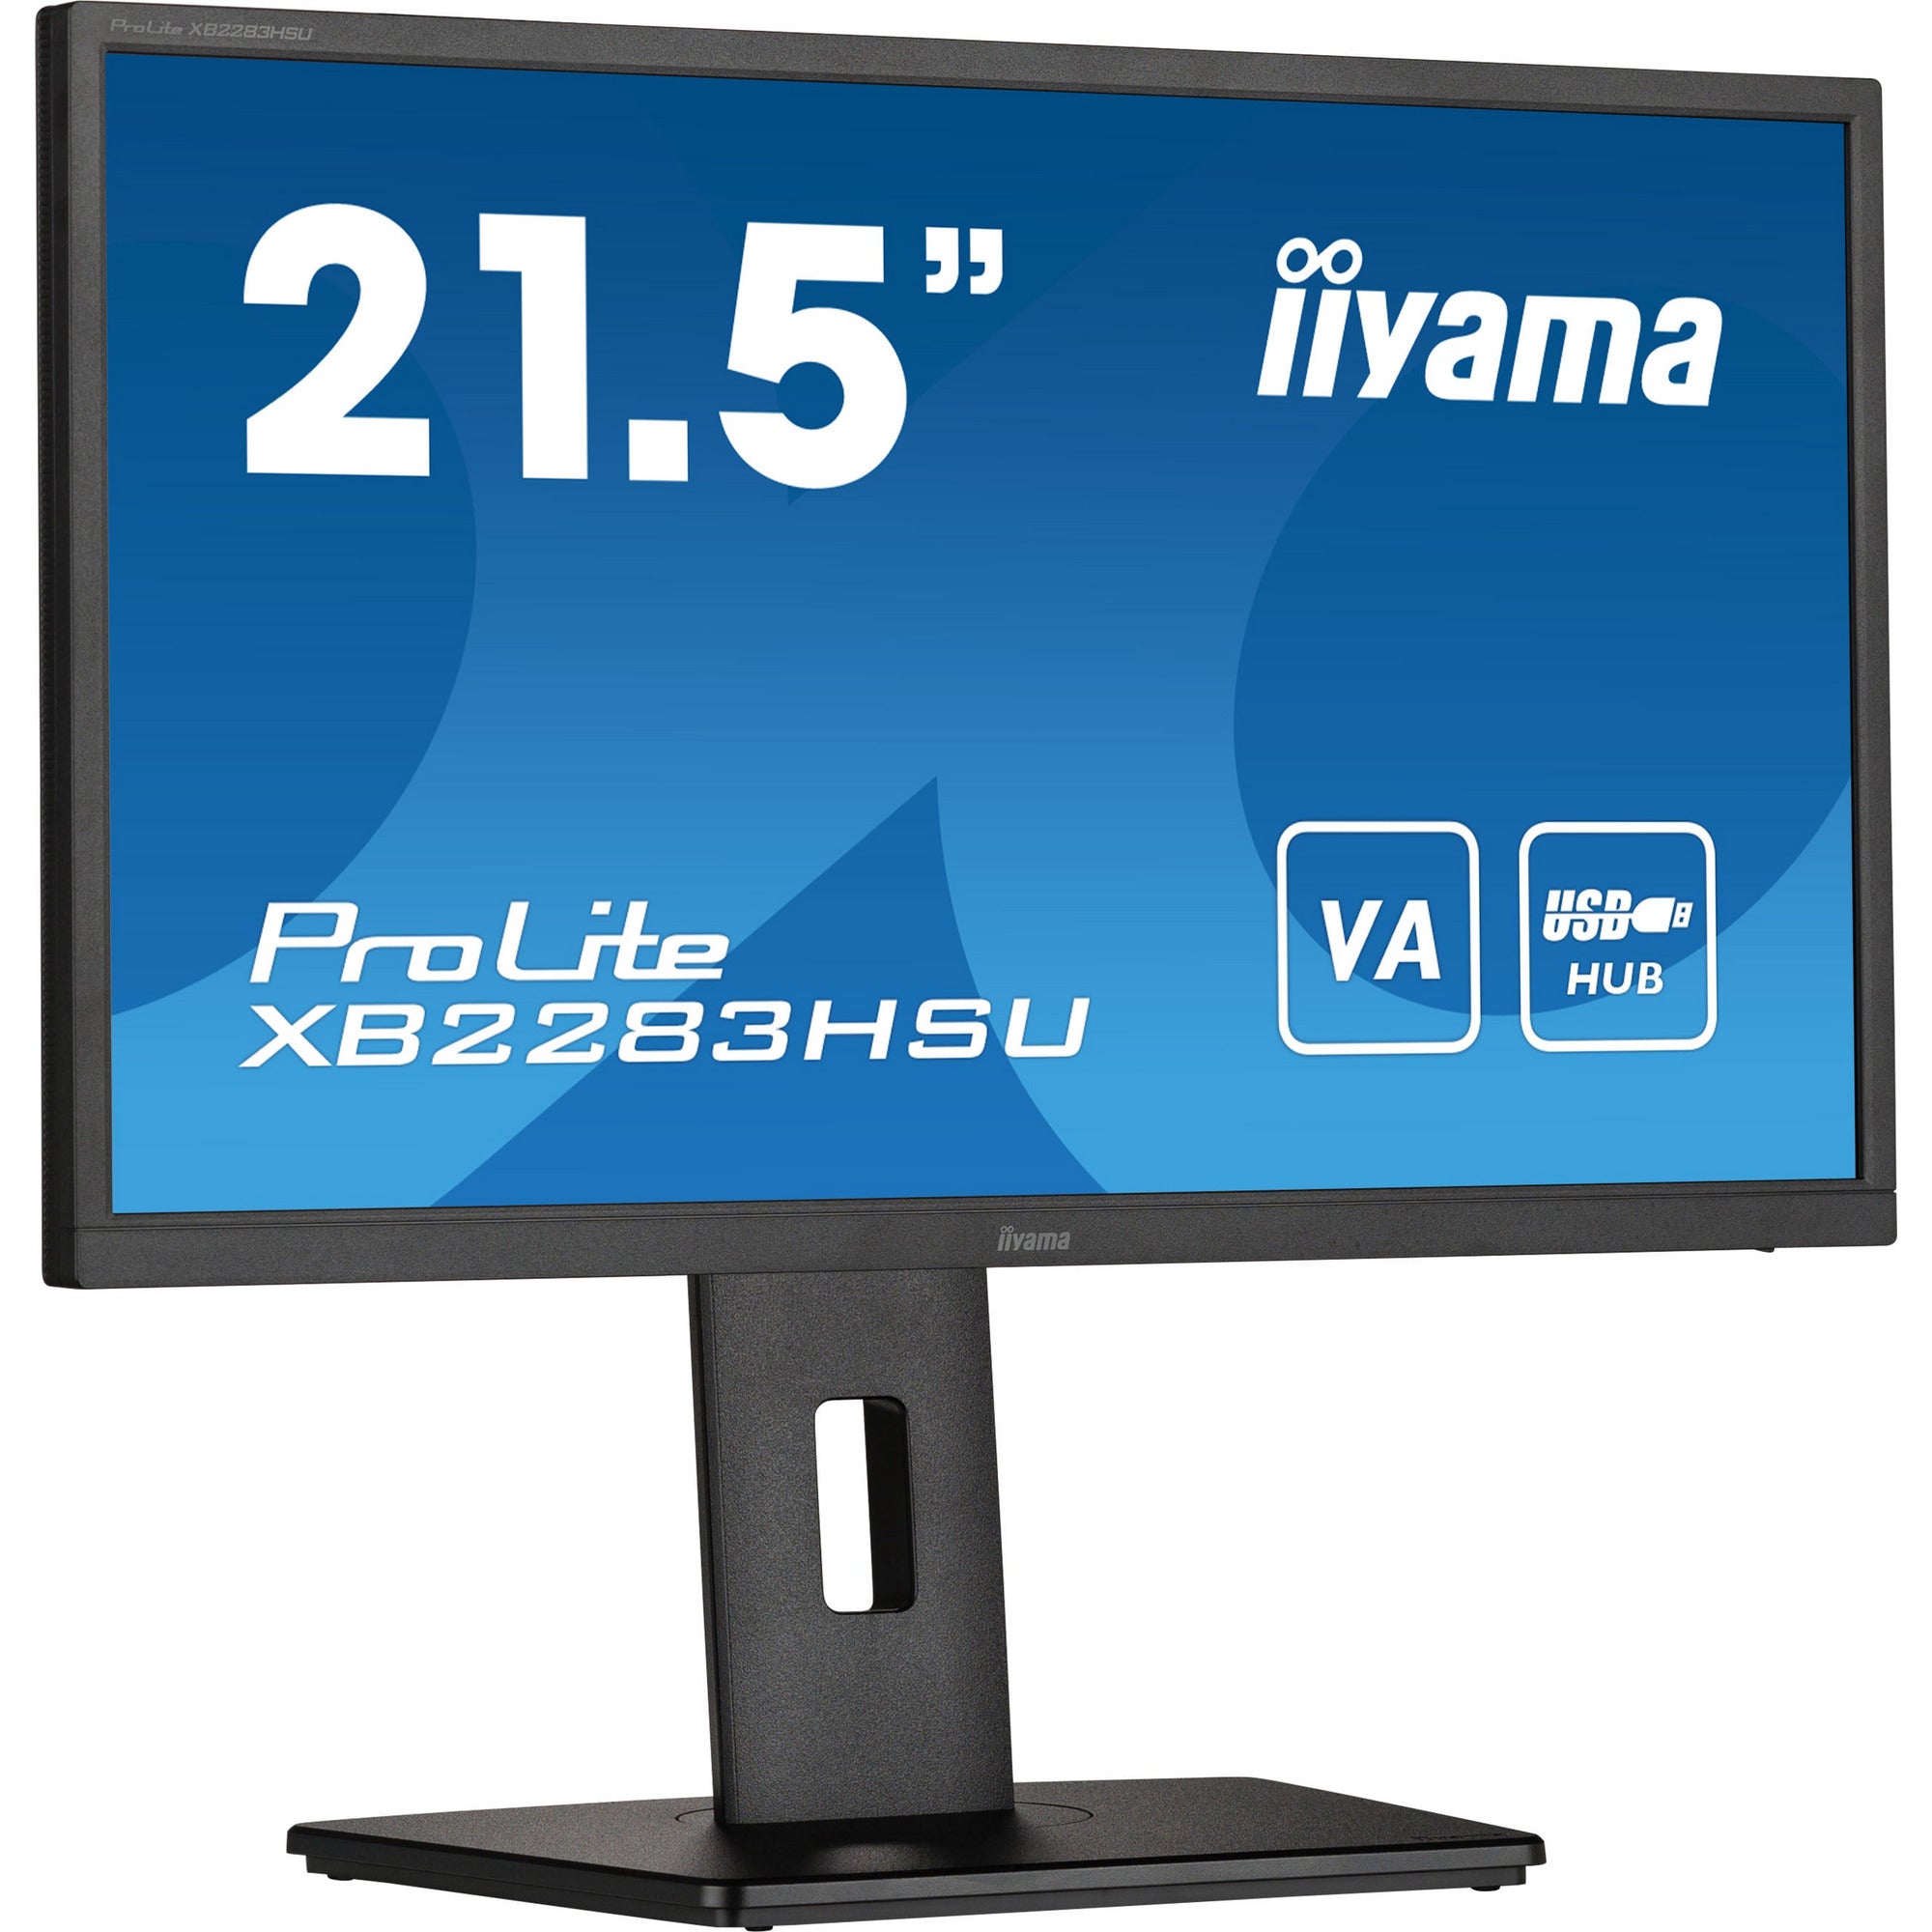 Iiyama ProLite XB2283HSU-B1 21.5” Full HD VA monitor with Height Adjust Stand